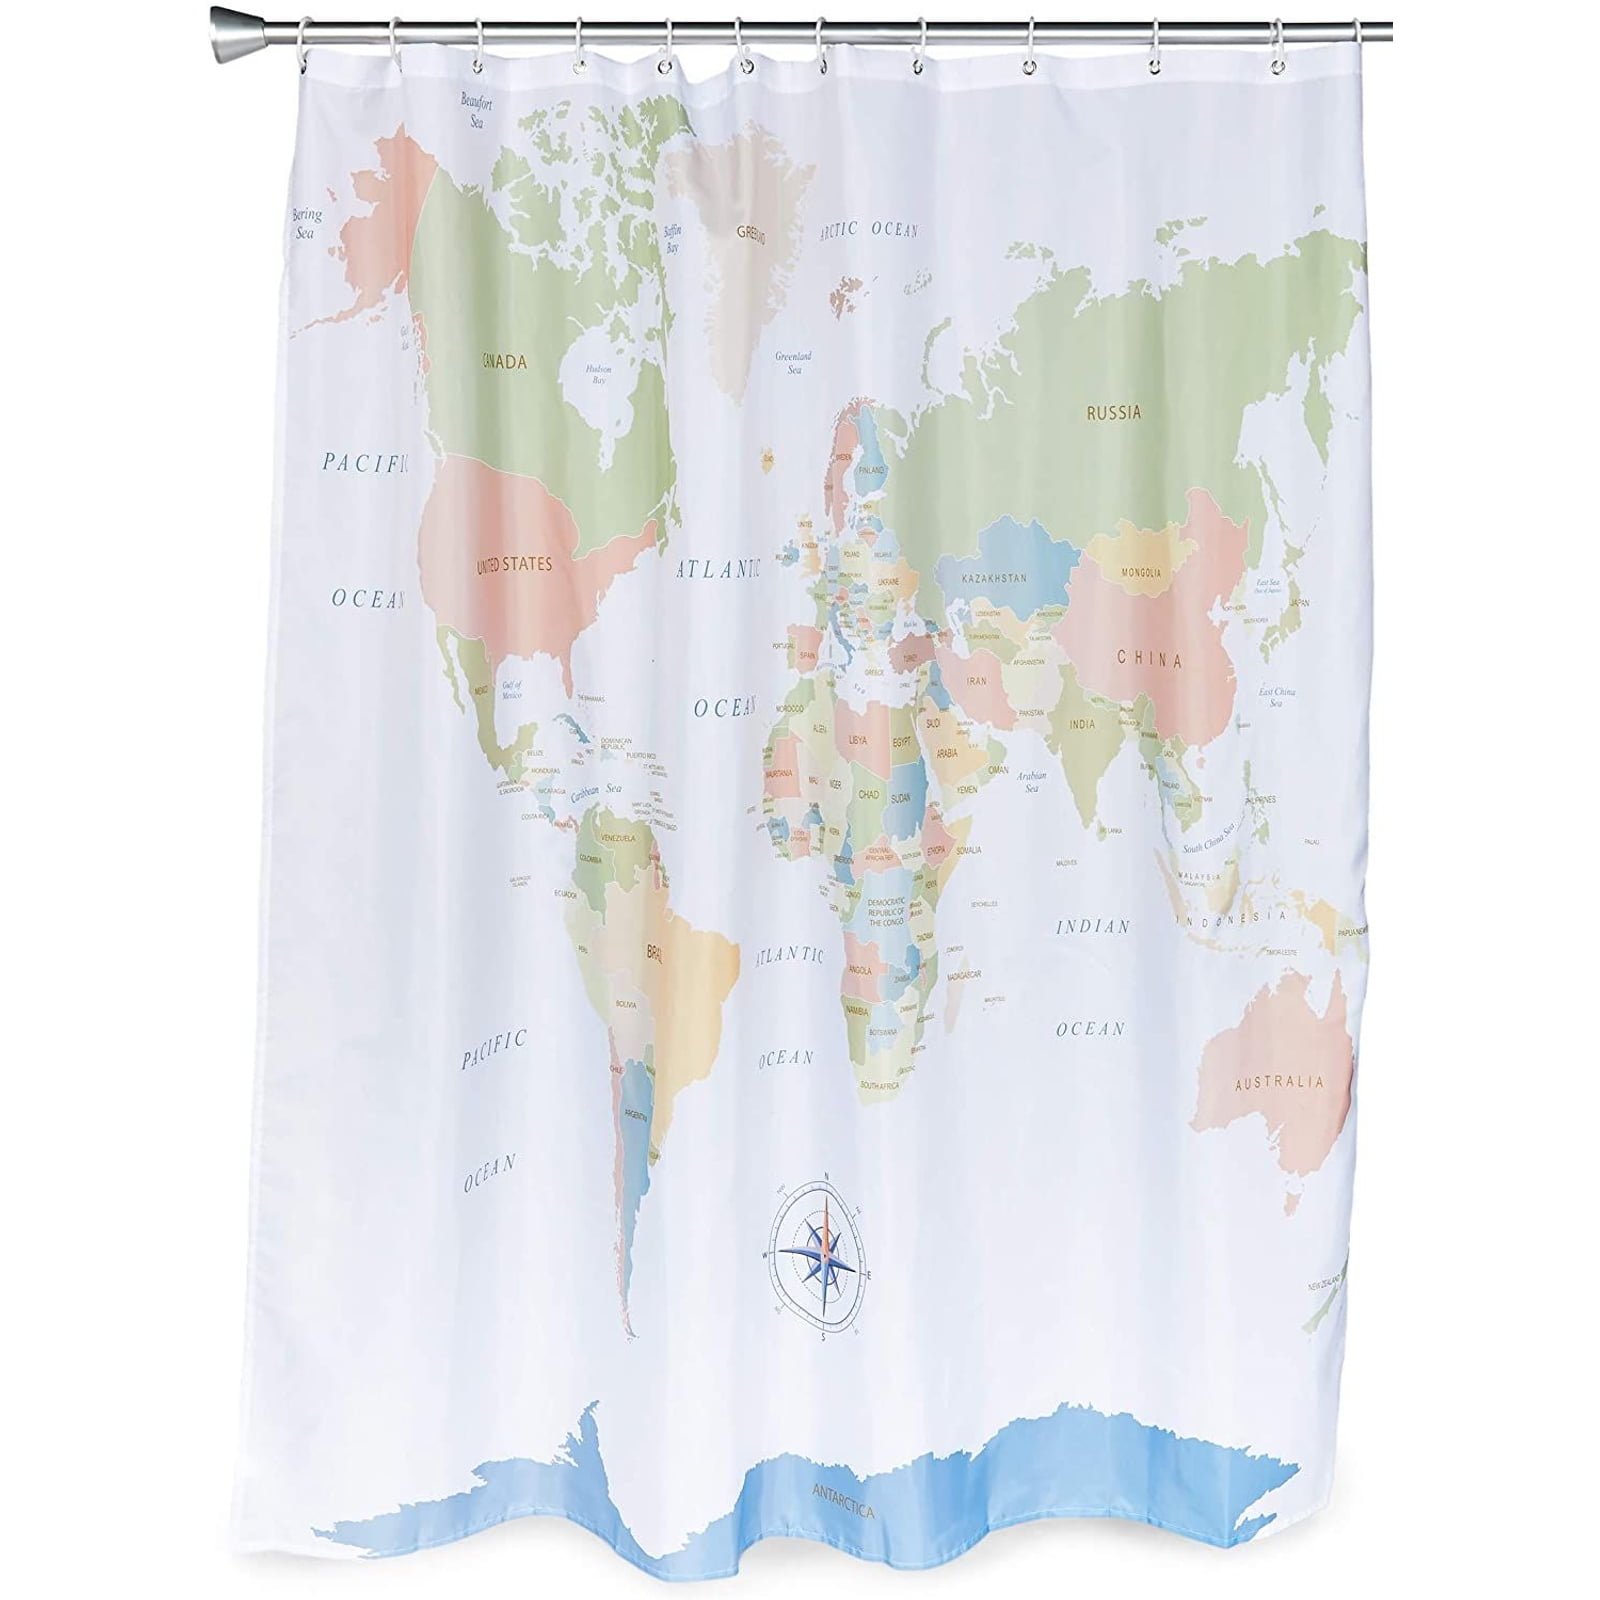 White and Black Design World Map Bathroom Waterproof Fabric Shower Curtain Set 